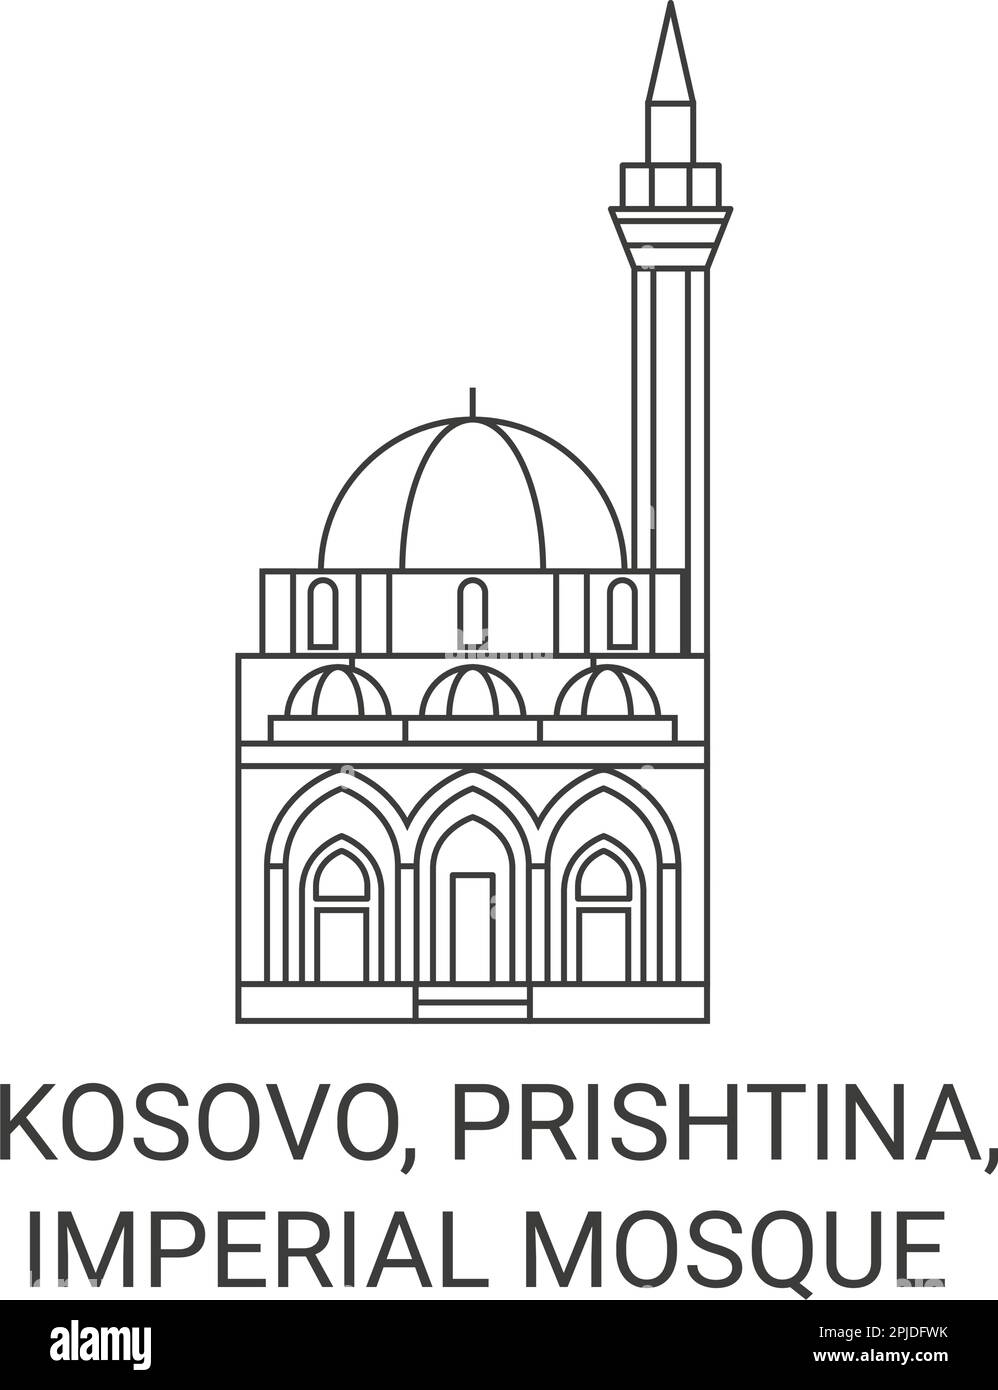 Kosovo, Prishtina, Imperial Mosque travel landmark vector illustration Stock Vector